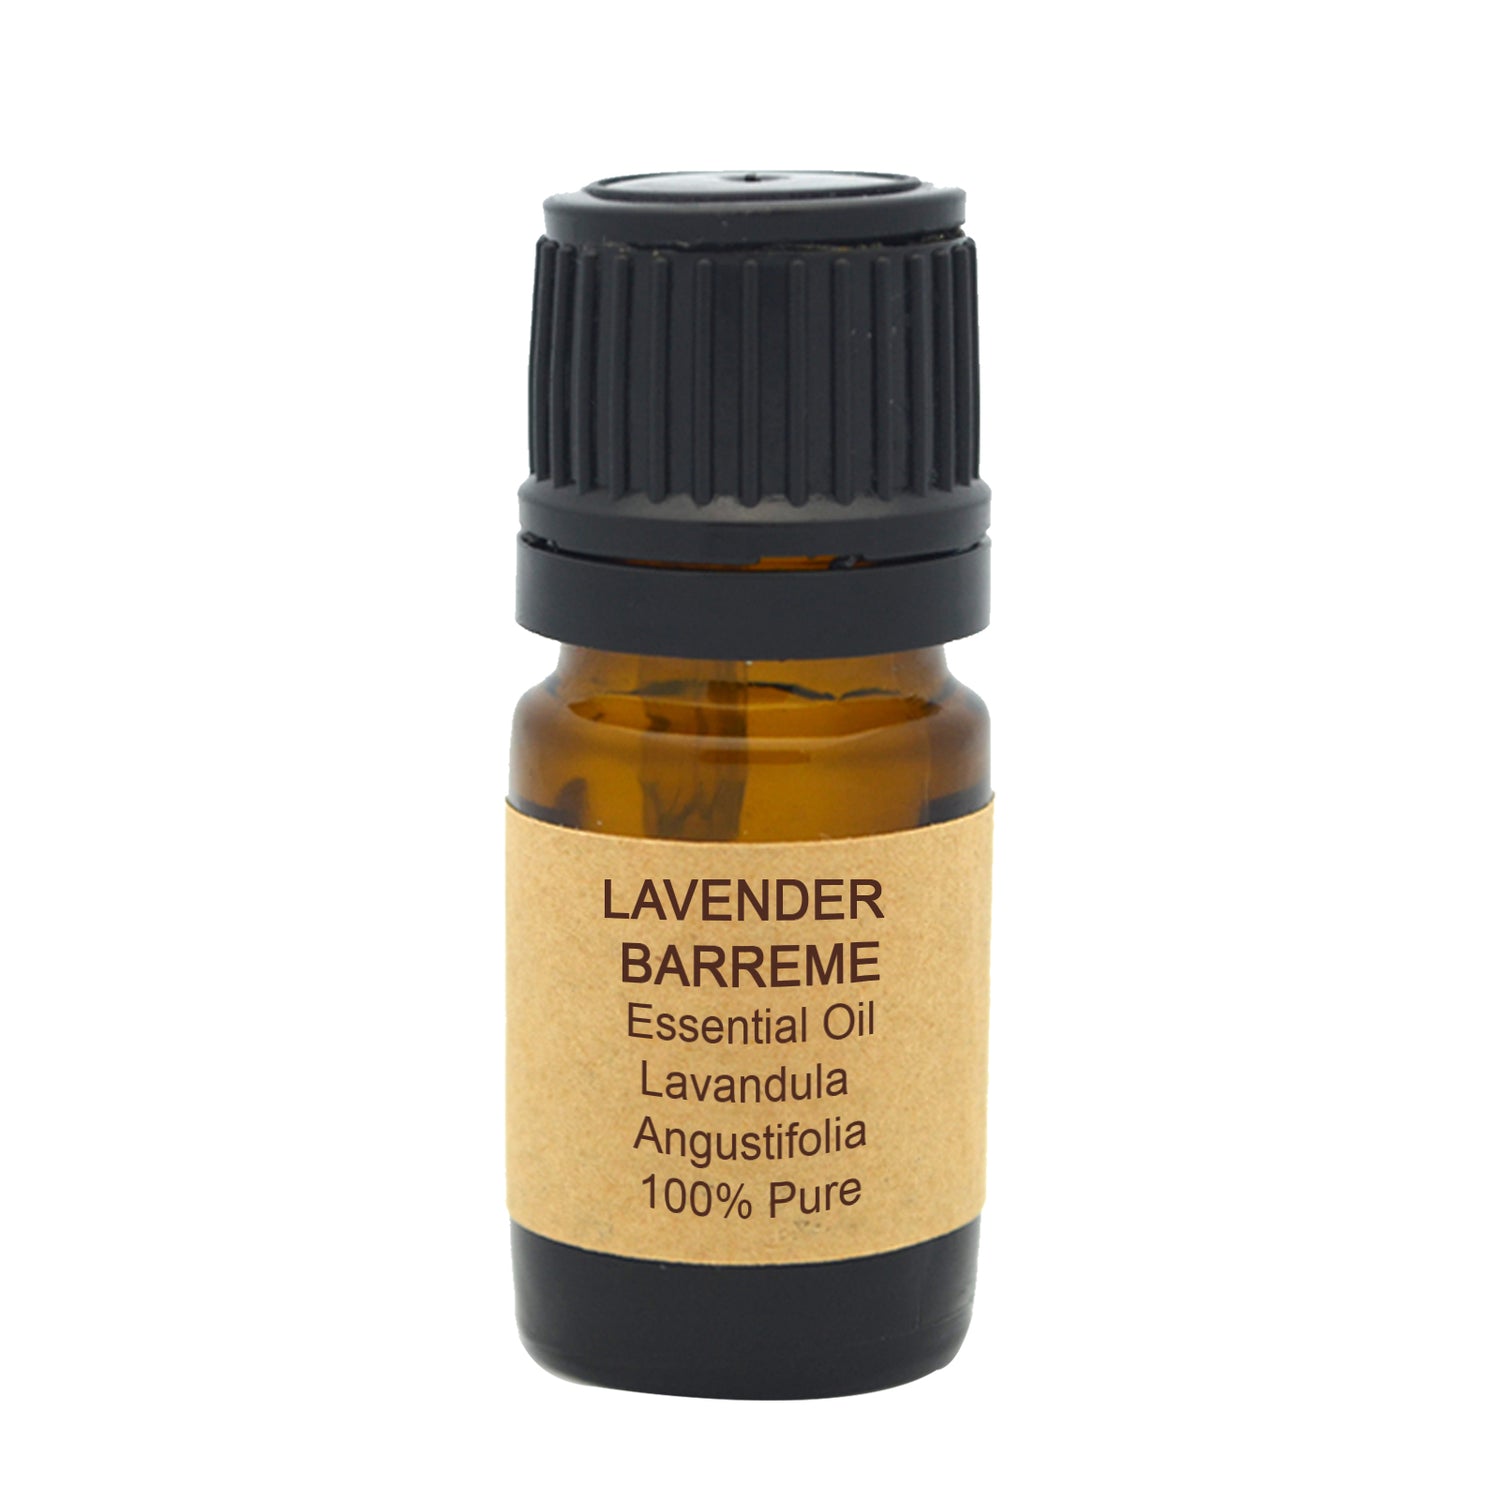 Lavender Essential from France, Region of Barreme